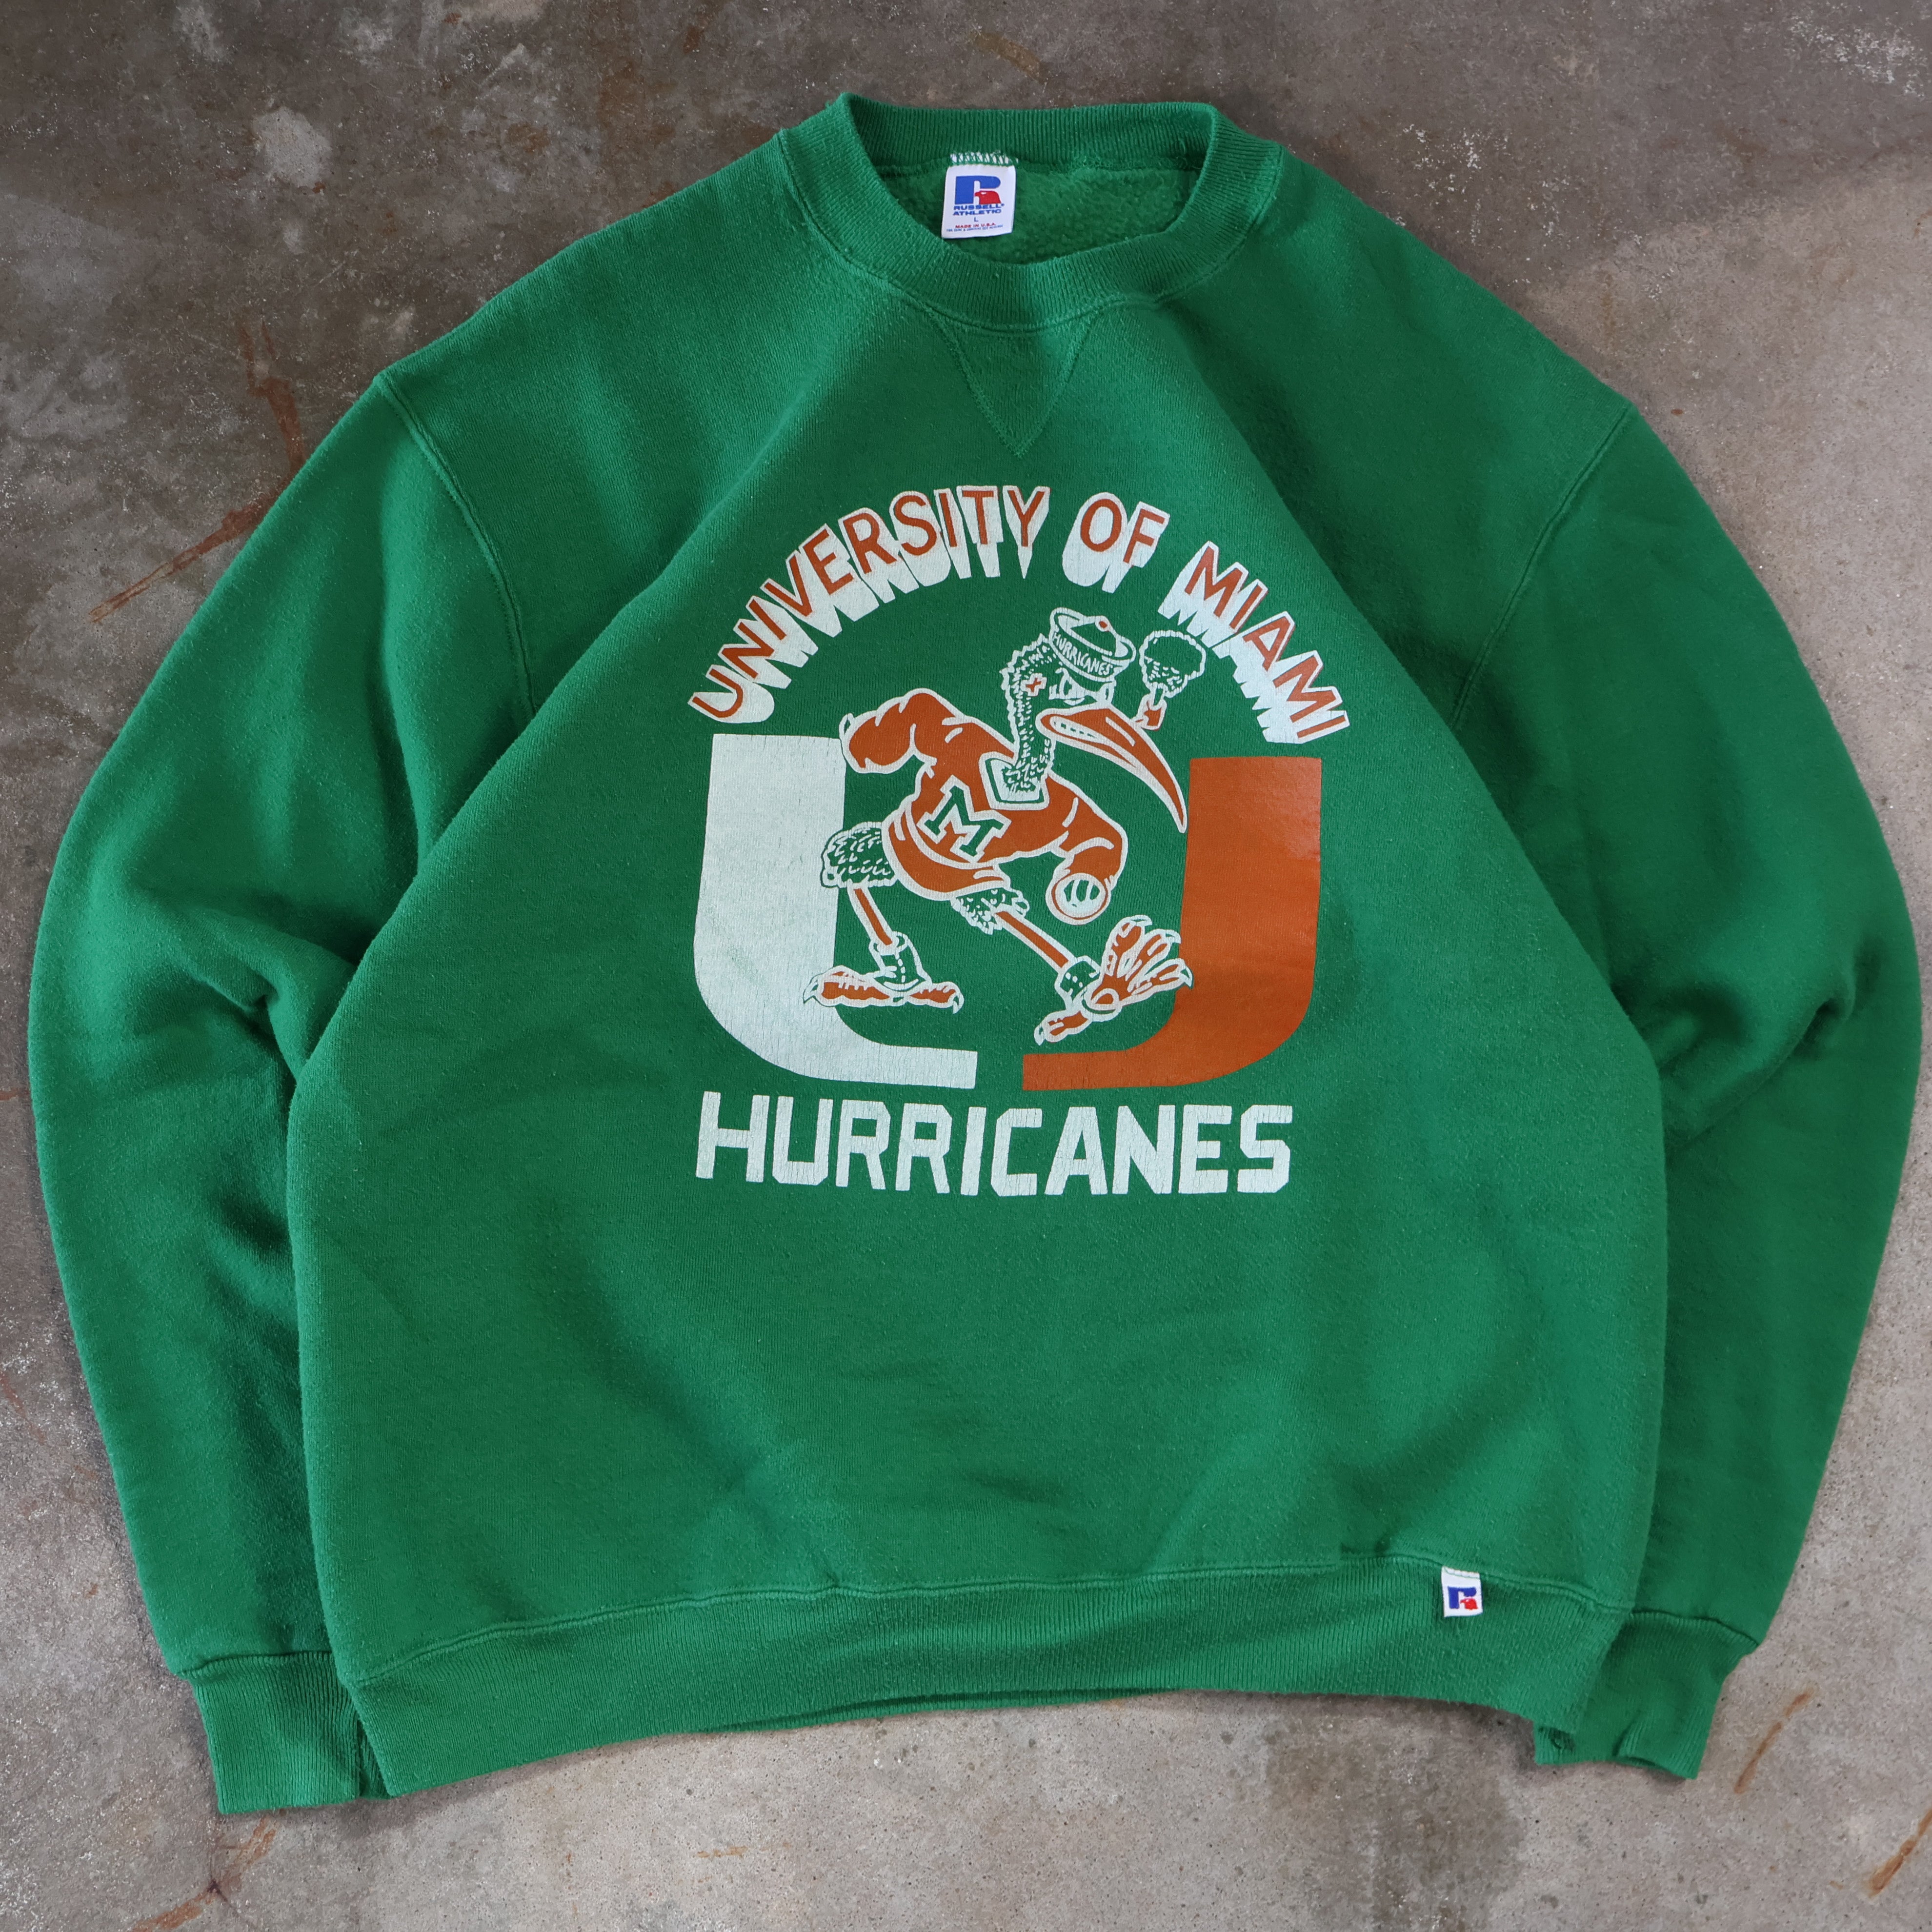 University of Miami Hurricanes 80s Sweatshirt (Large)